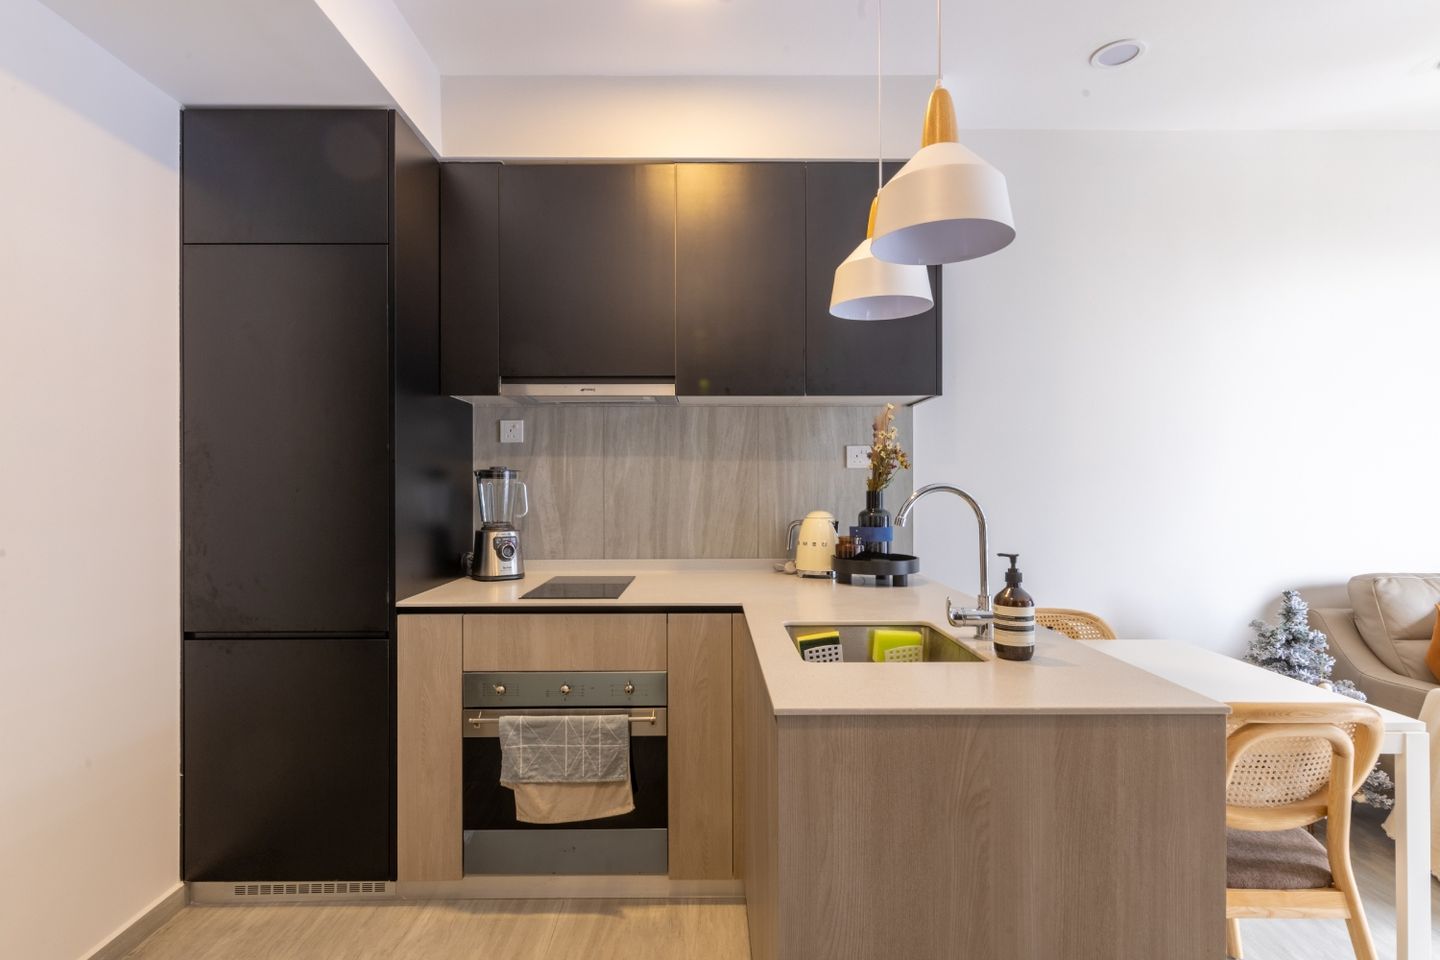 L-Shaped Kitchen Design With Tall Black Storage Units - Livspace